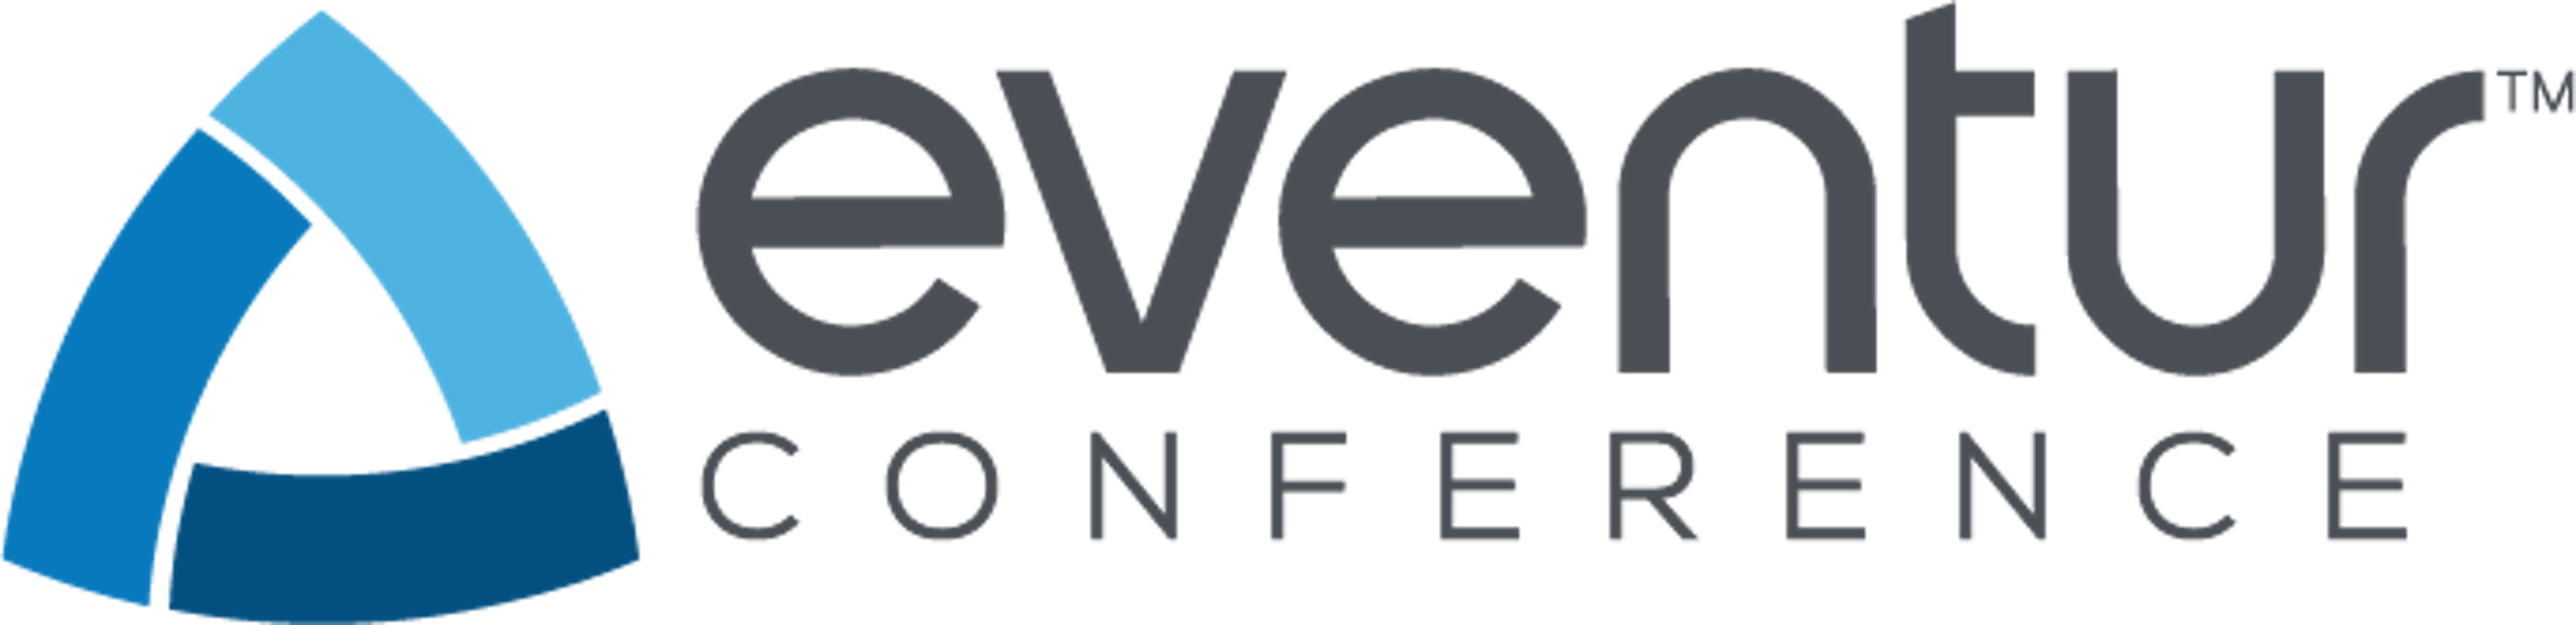 Eventur Conference Logo